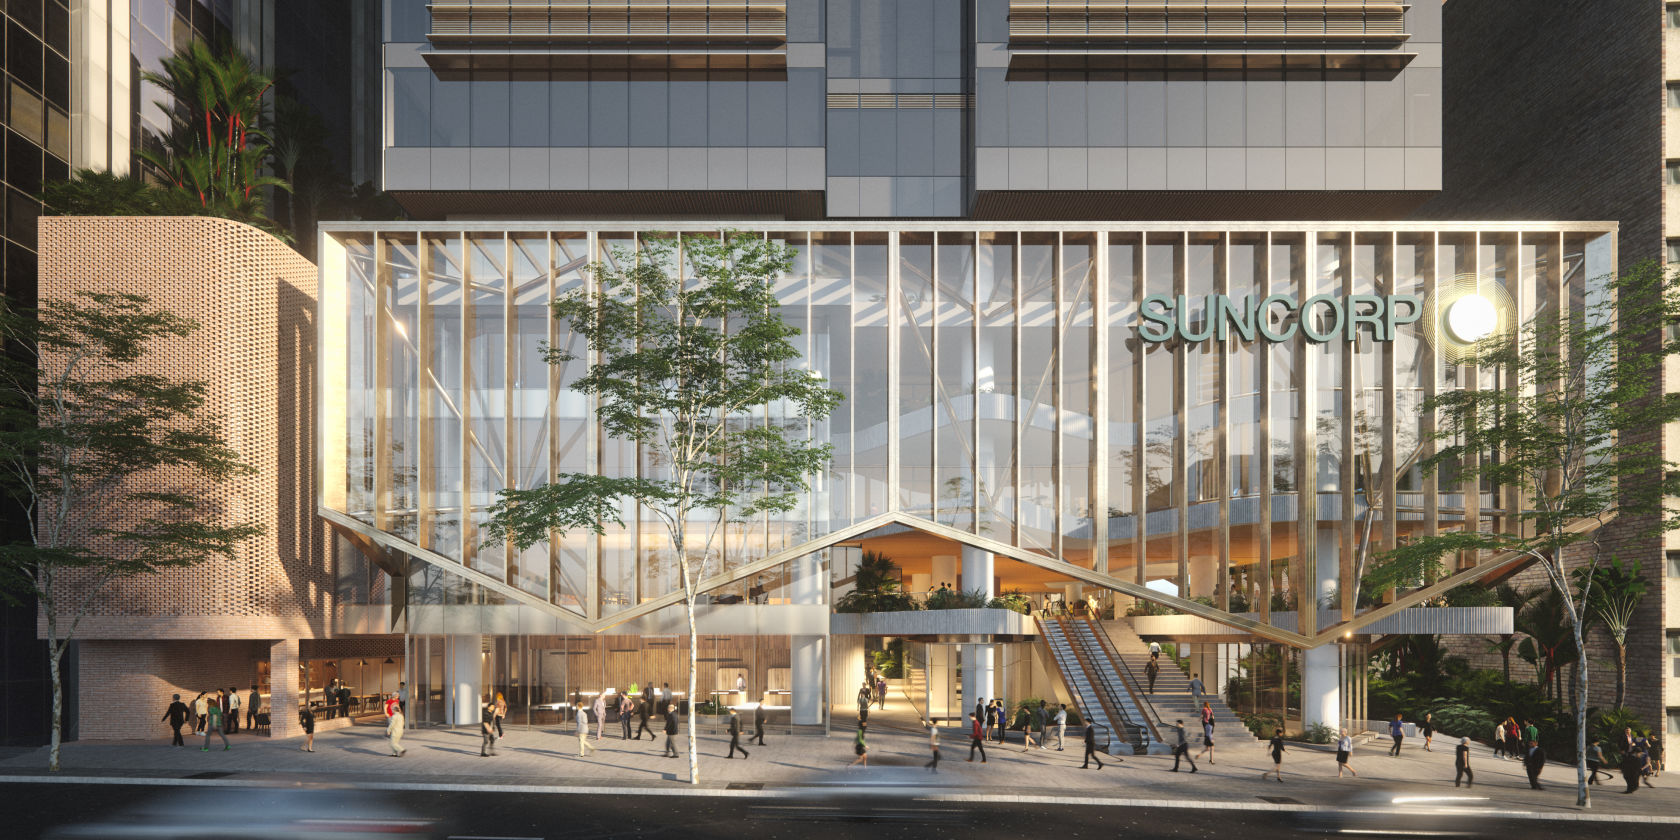 Construction begins on Suncorp’s new Brisbane Headquarters